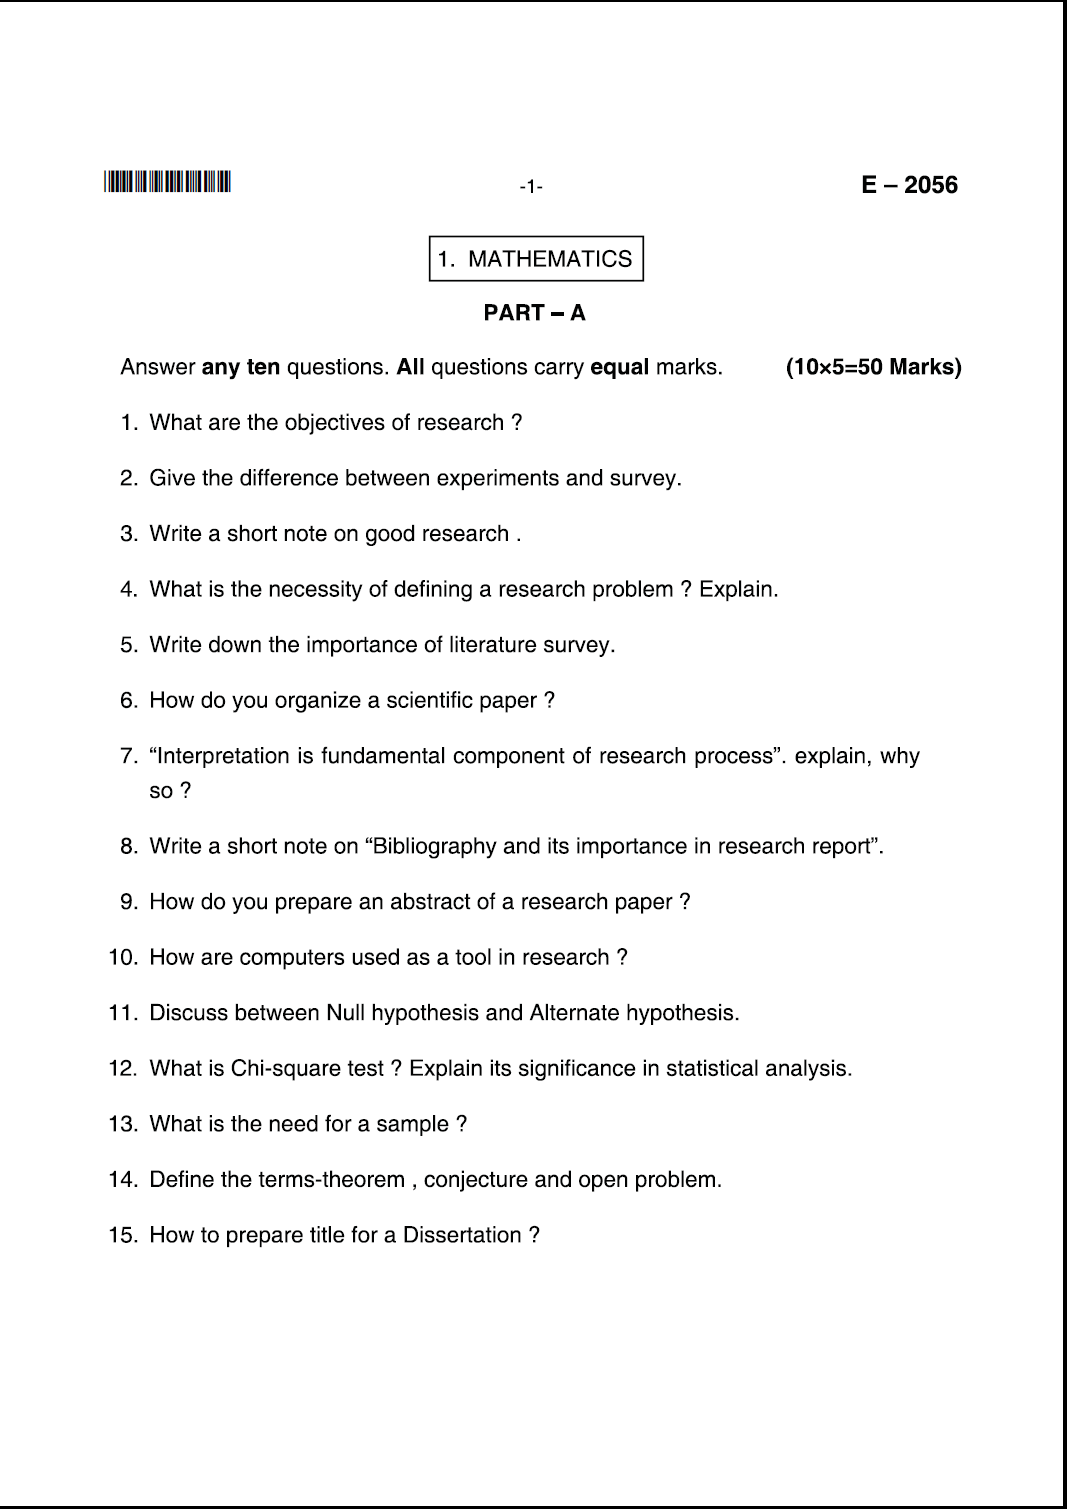 phd entrance exam model question paper for economics